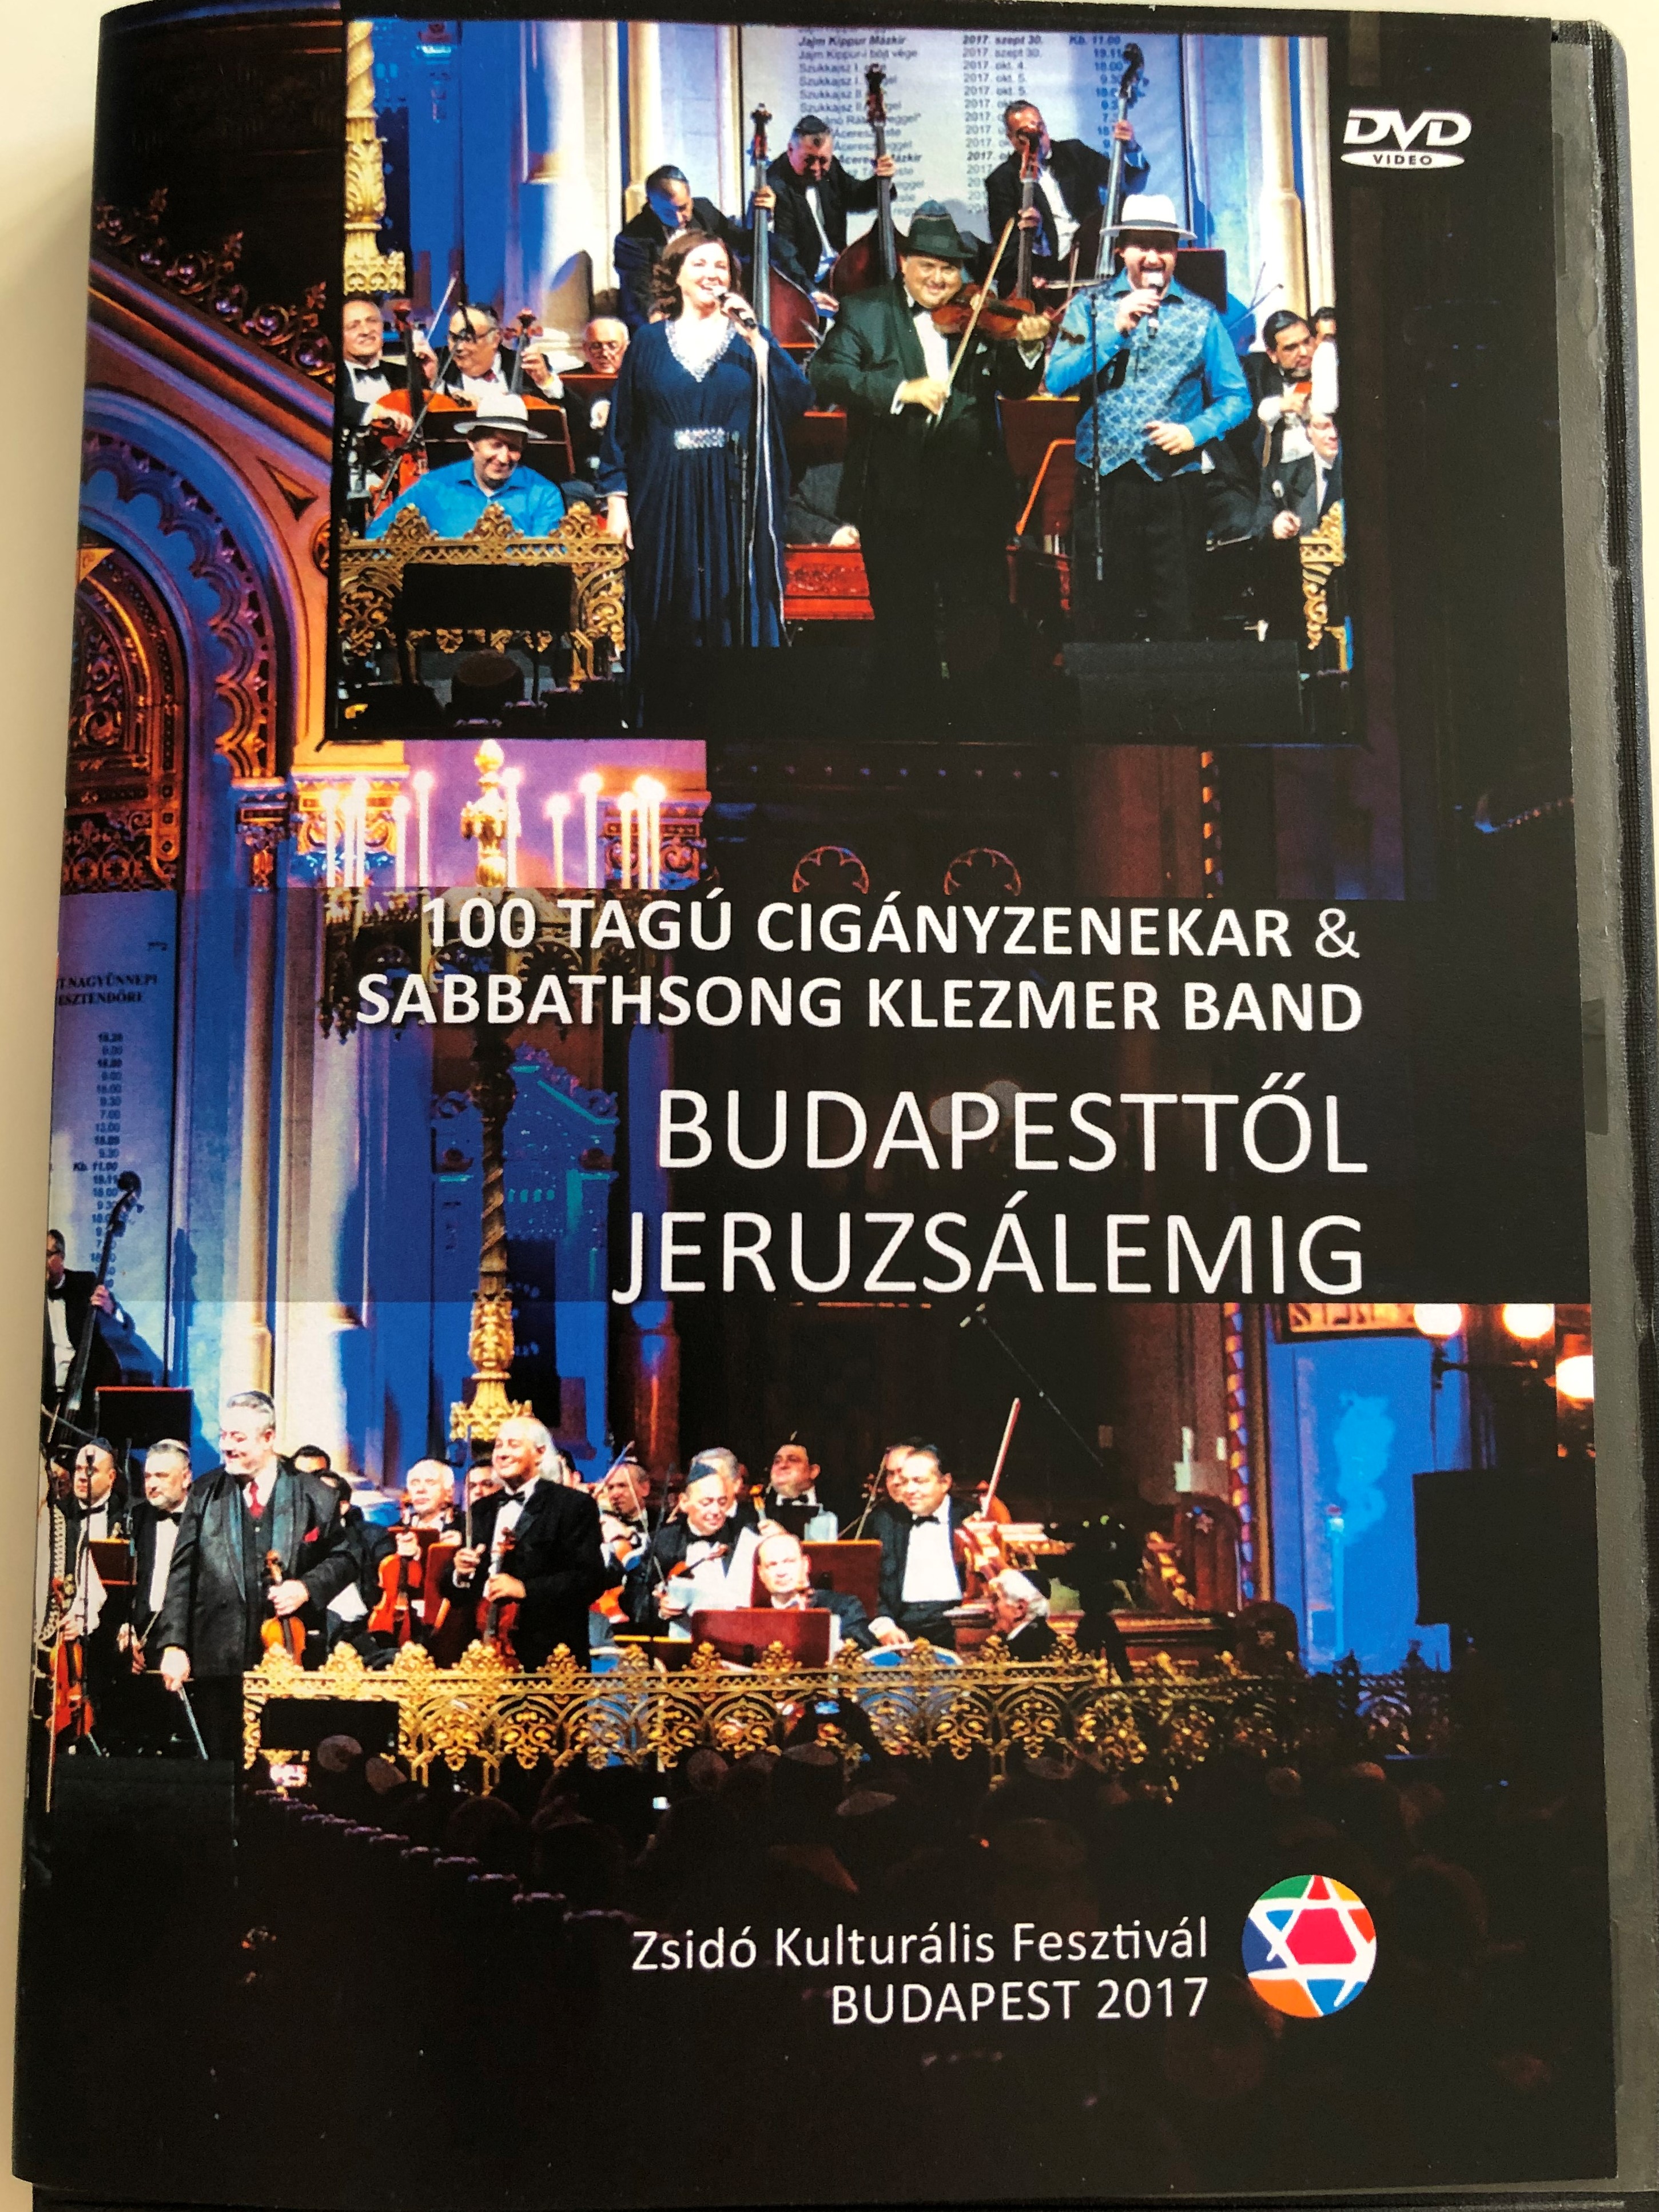 budapestt-l-jeruzs-lemig-dvd-2017-100-tag-cig-nyzenekar-sabbathsong-klezmer-band-from-budapest-to-jerusalem-1-.jpg